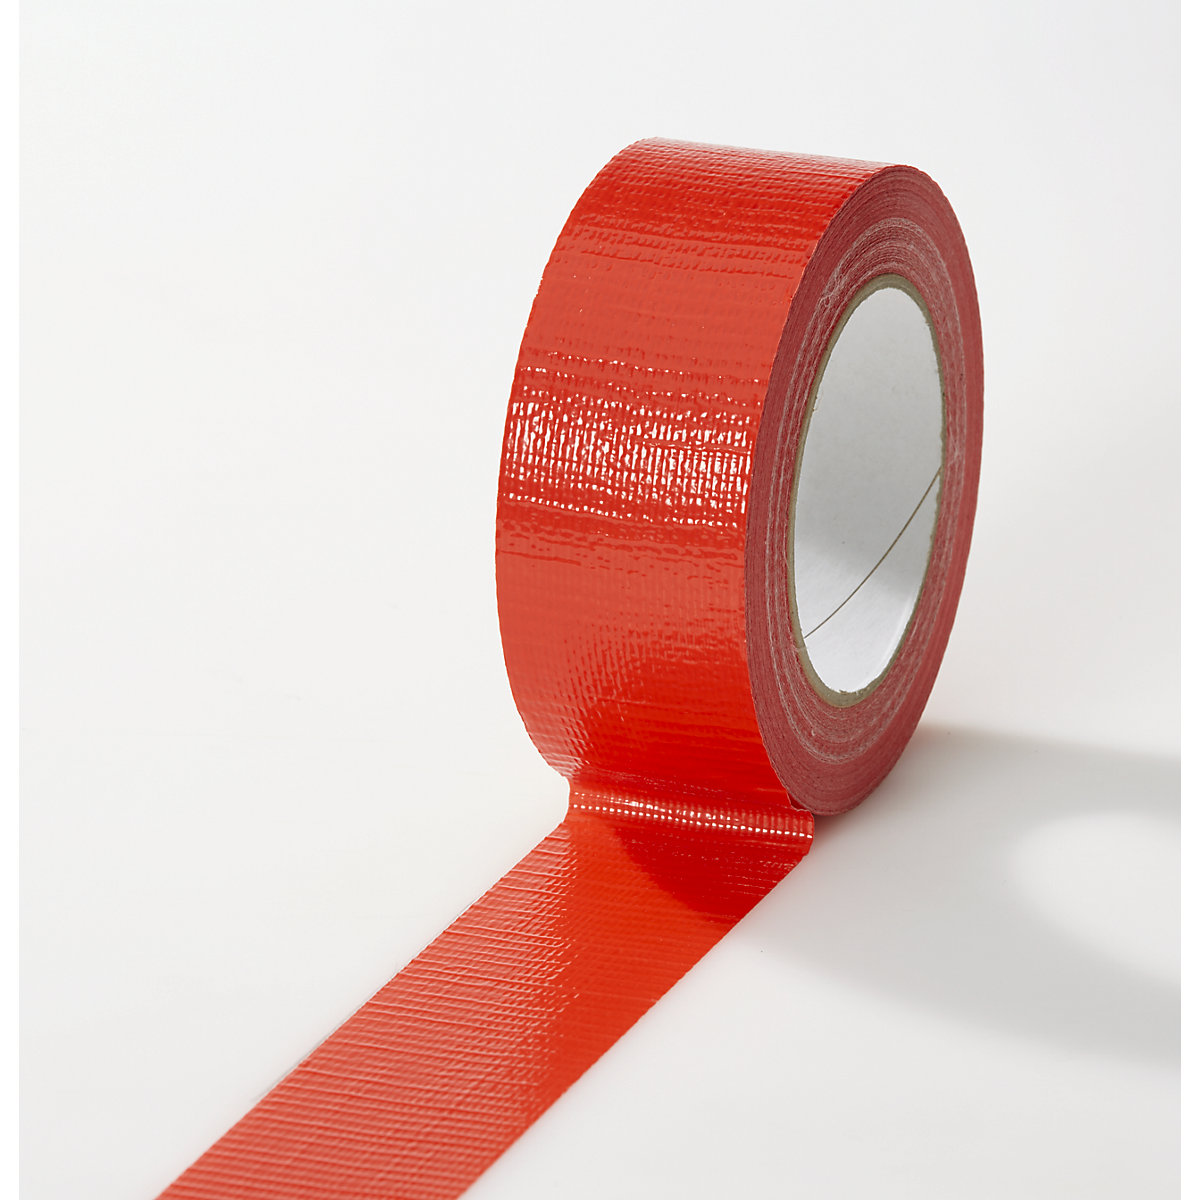 Tkaninová páska, v různých barvách, bal.j. 24 rolí, červená, šířka pásky 38 mm-4